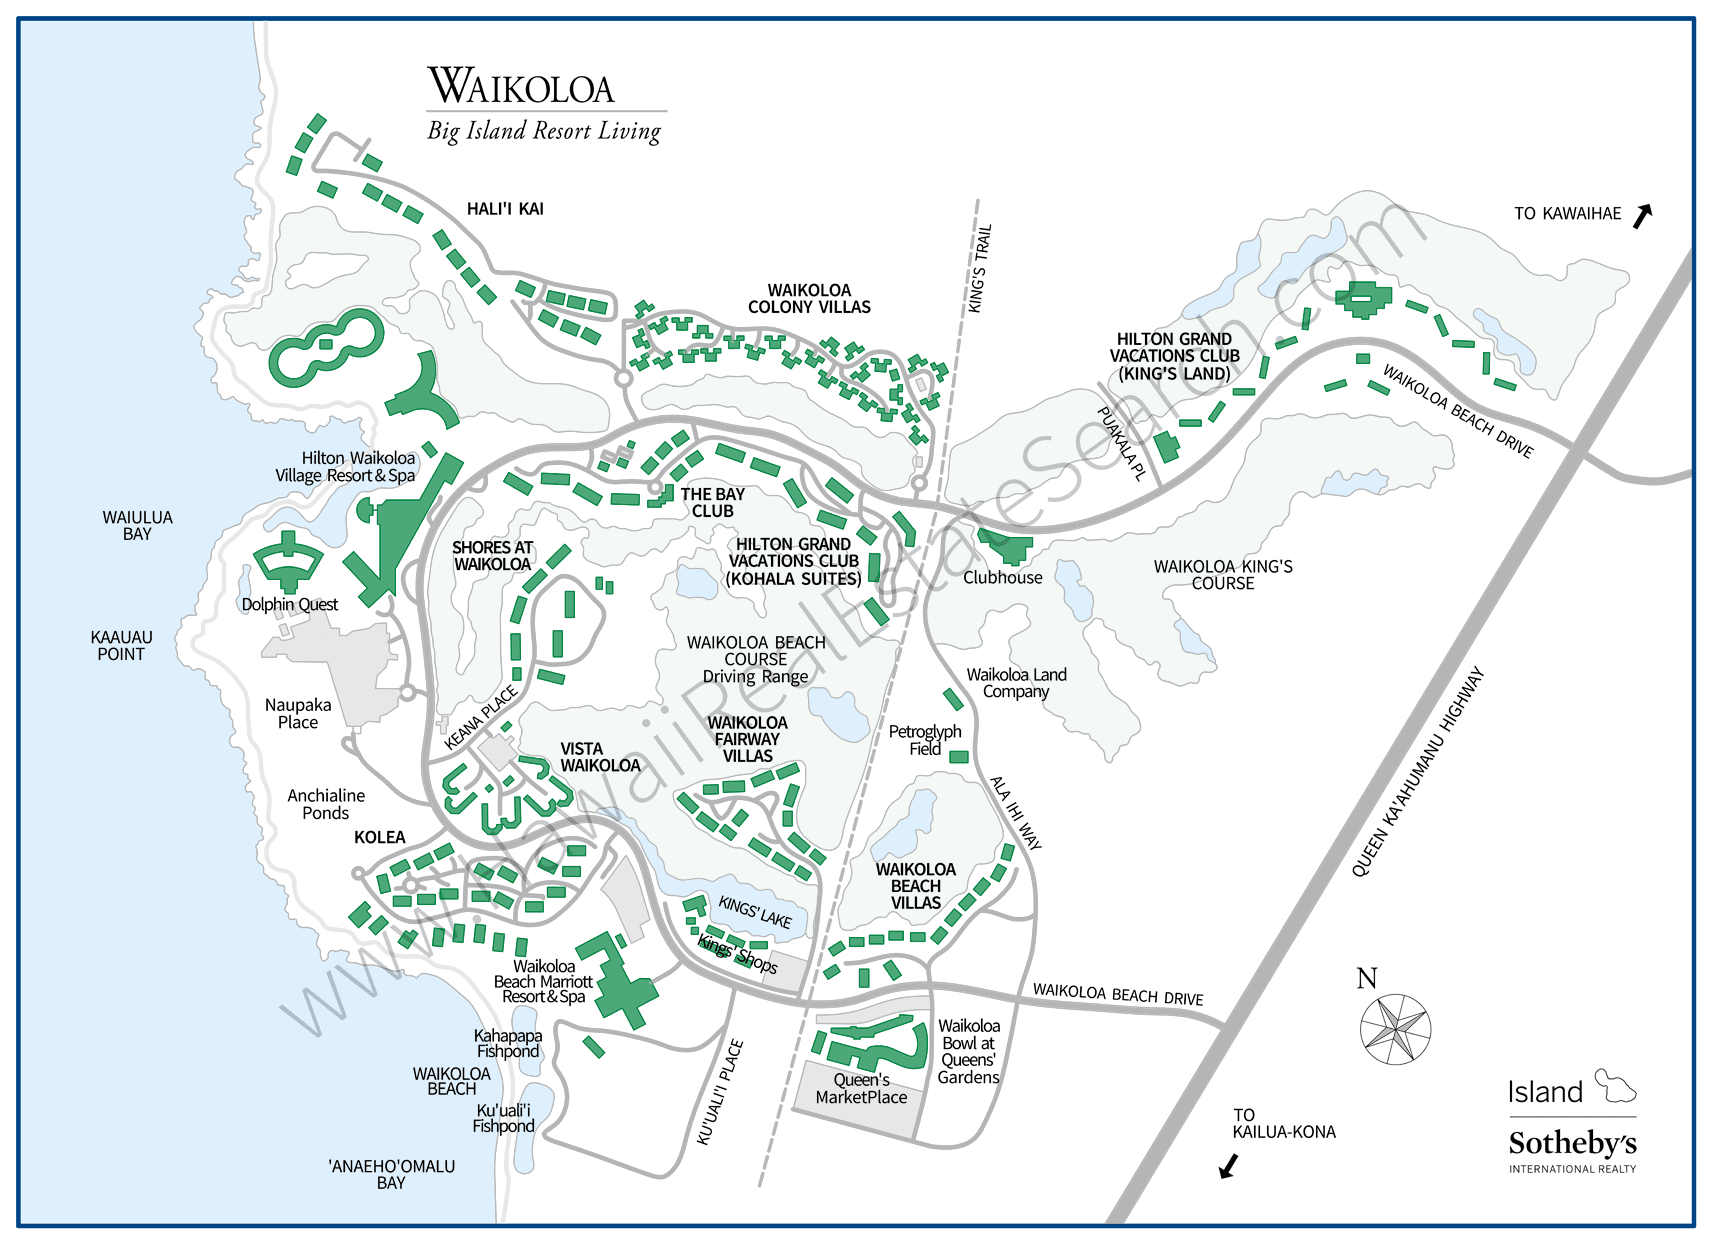 Waikoloa Resort Map Updated 2018